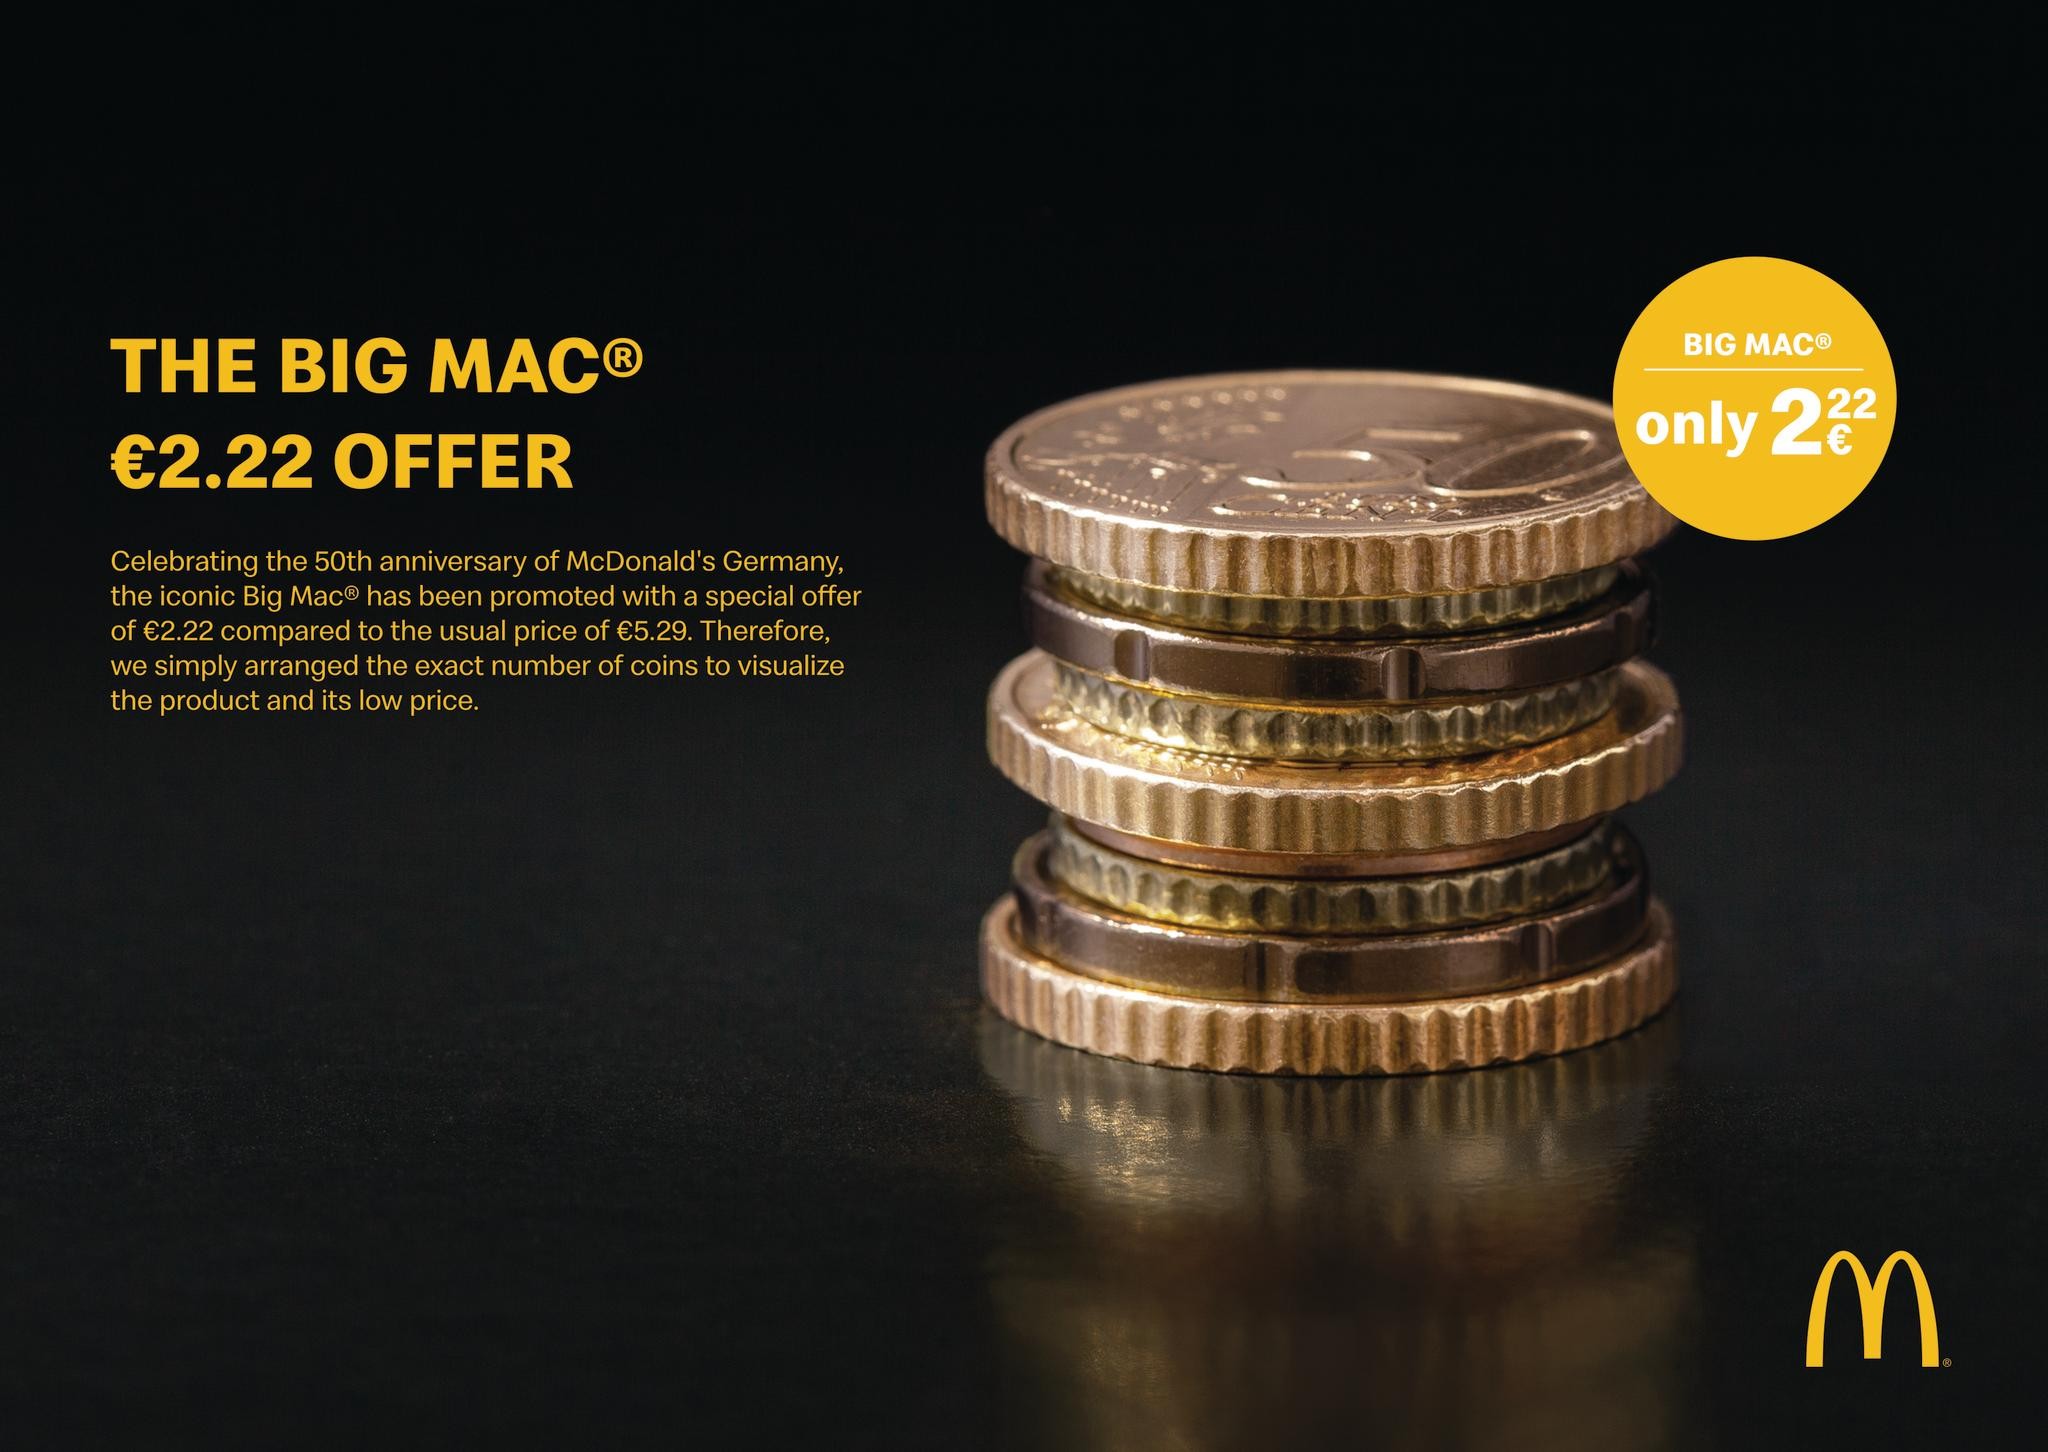 The Big Mac €2.22 offer